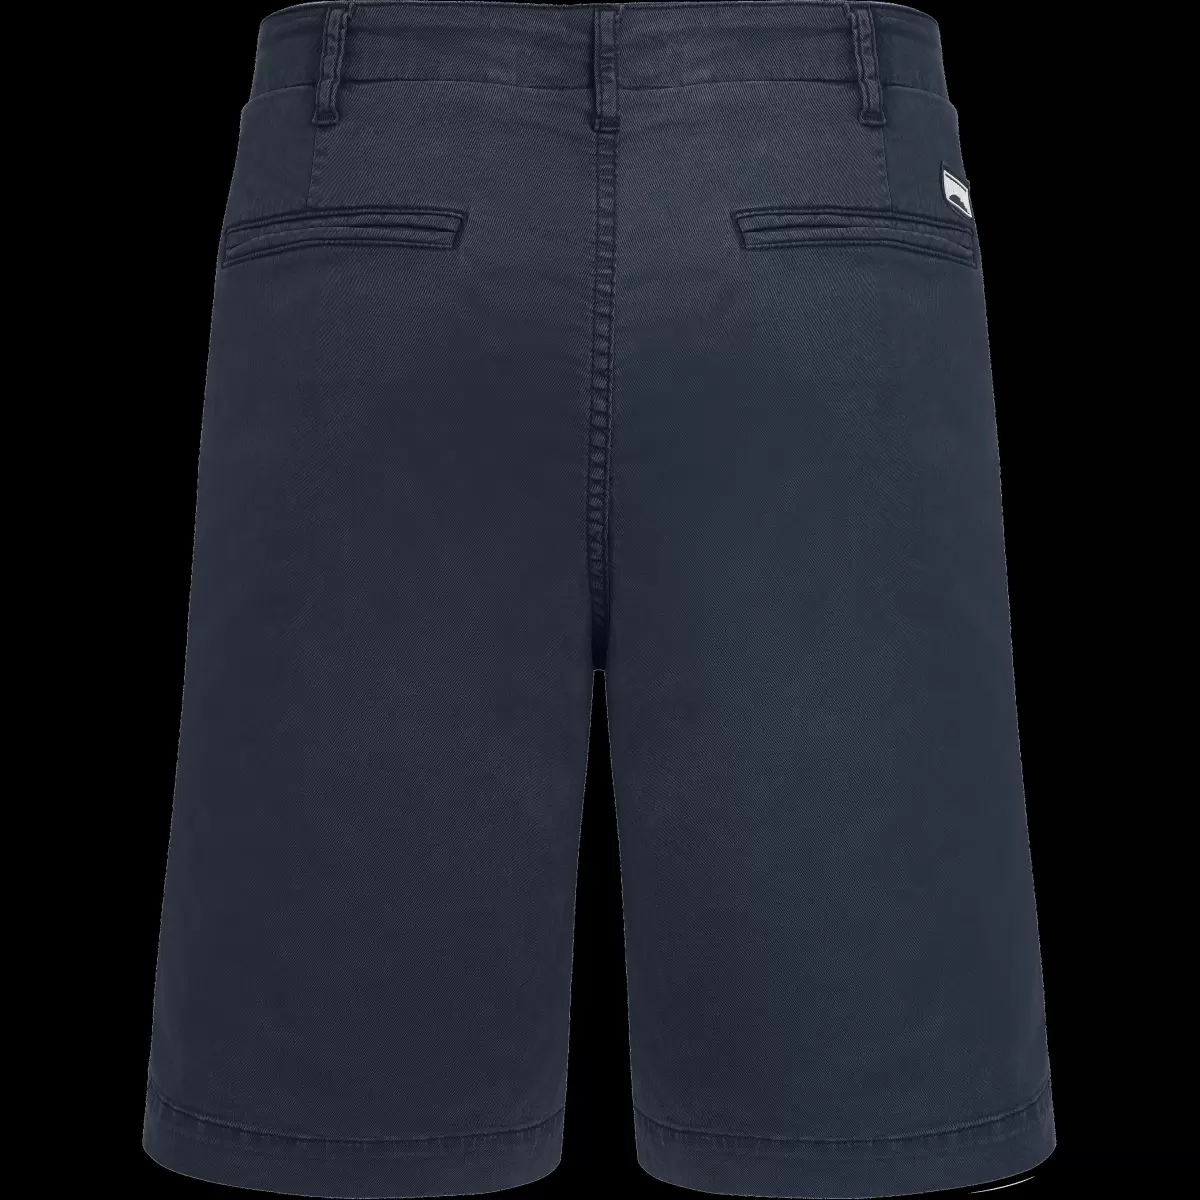 Hombre Bermudas De Color Liso Para Hombre Personalización Shorts Azul Marino / Azul Vilebrequin - 4